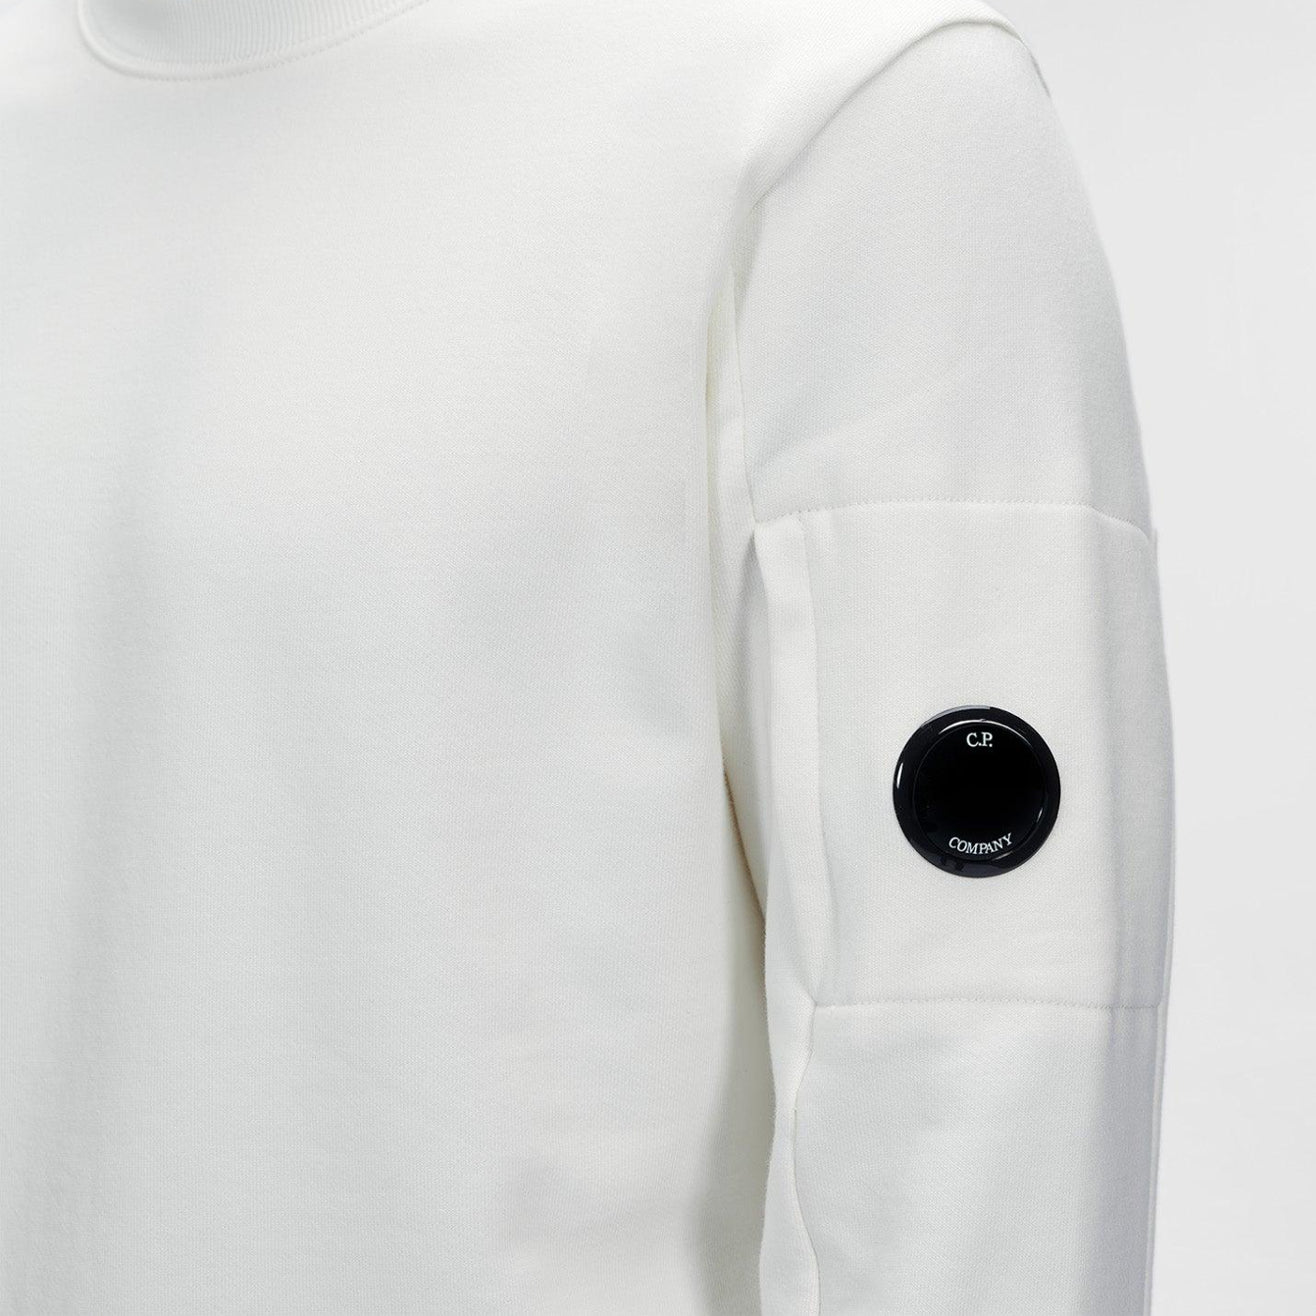 C.P. Company Arm Lens Sweatshirt - 103 White - Escape Menswear